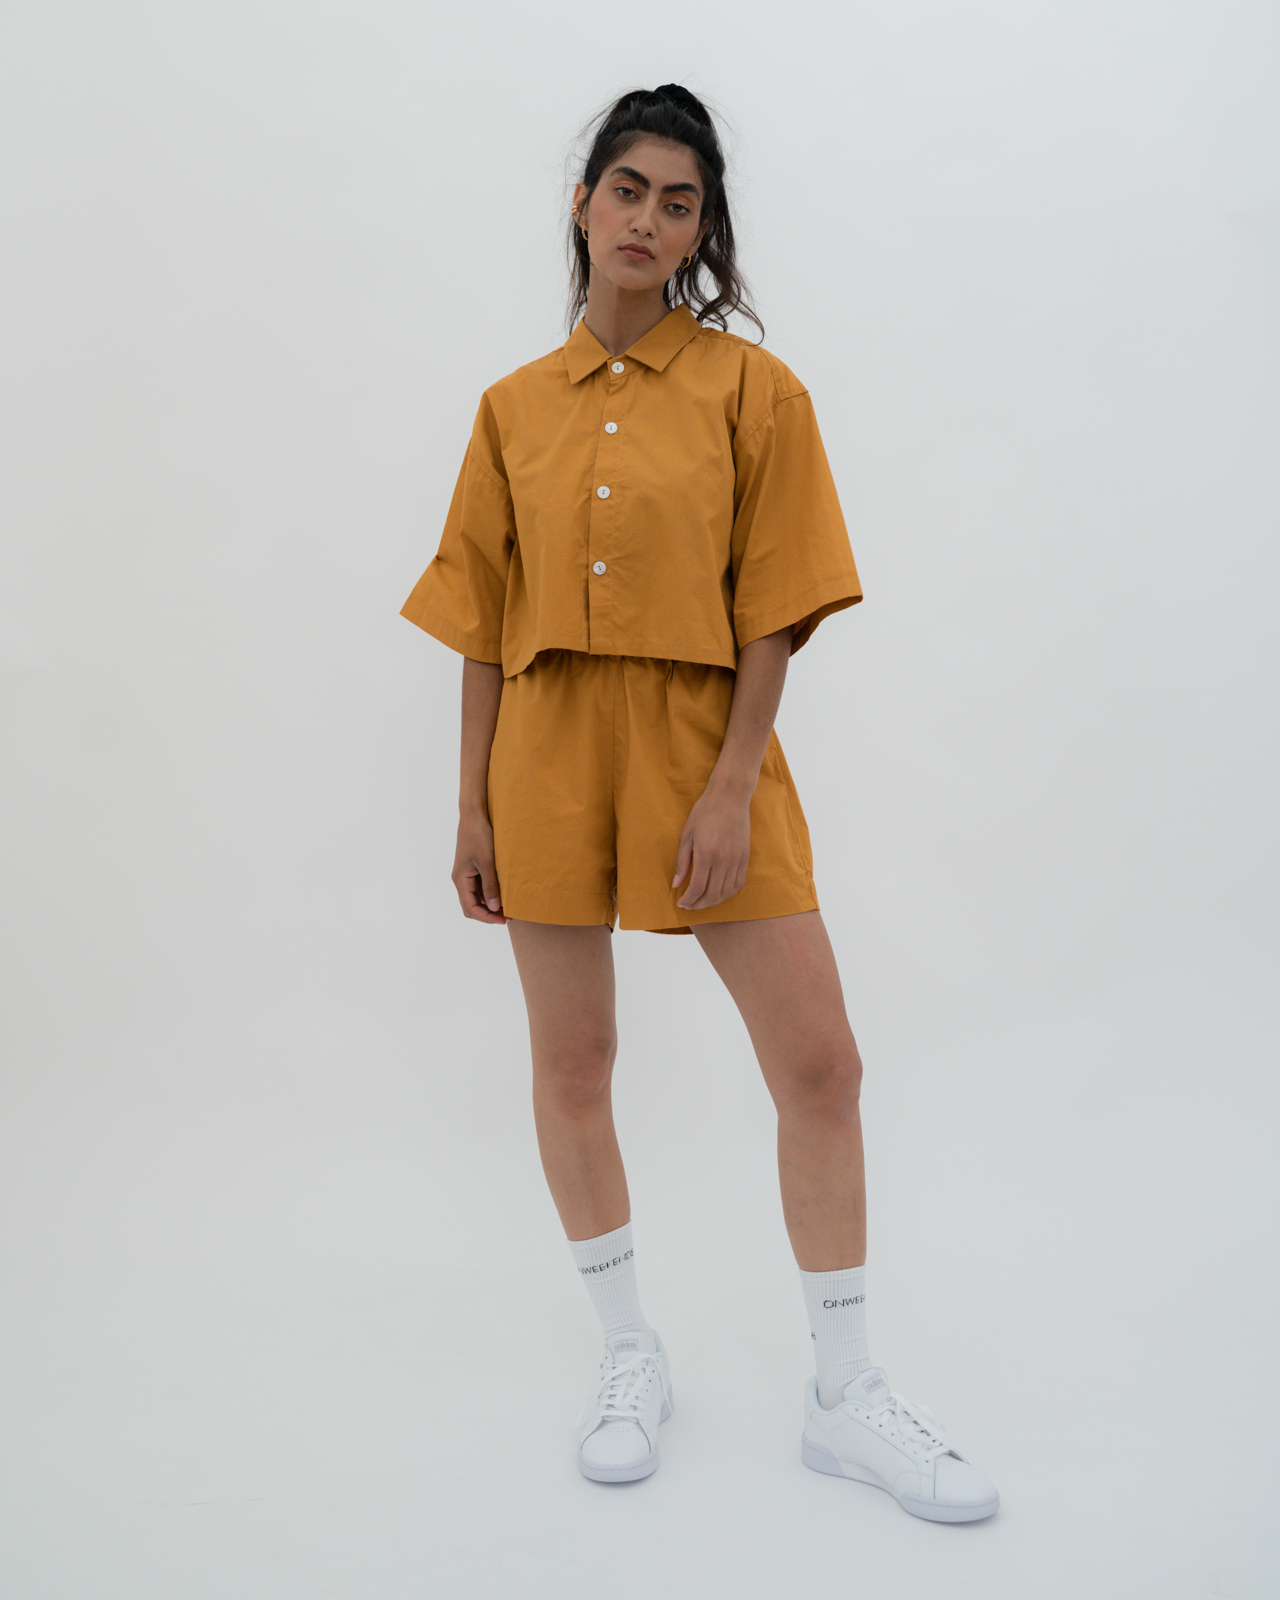 Varianten: The PJ Shorts Dusty Orange